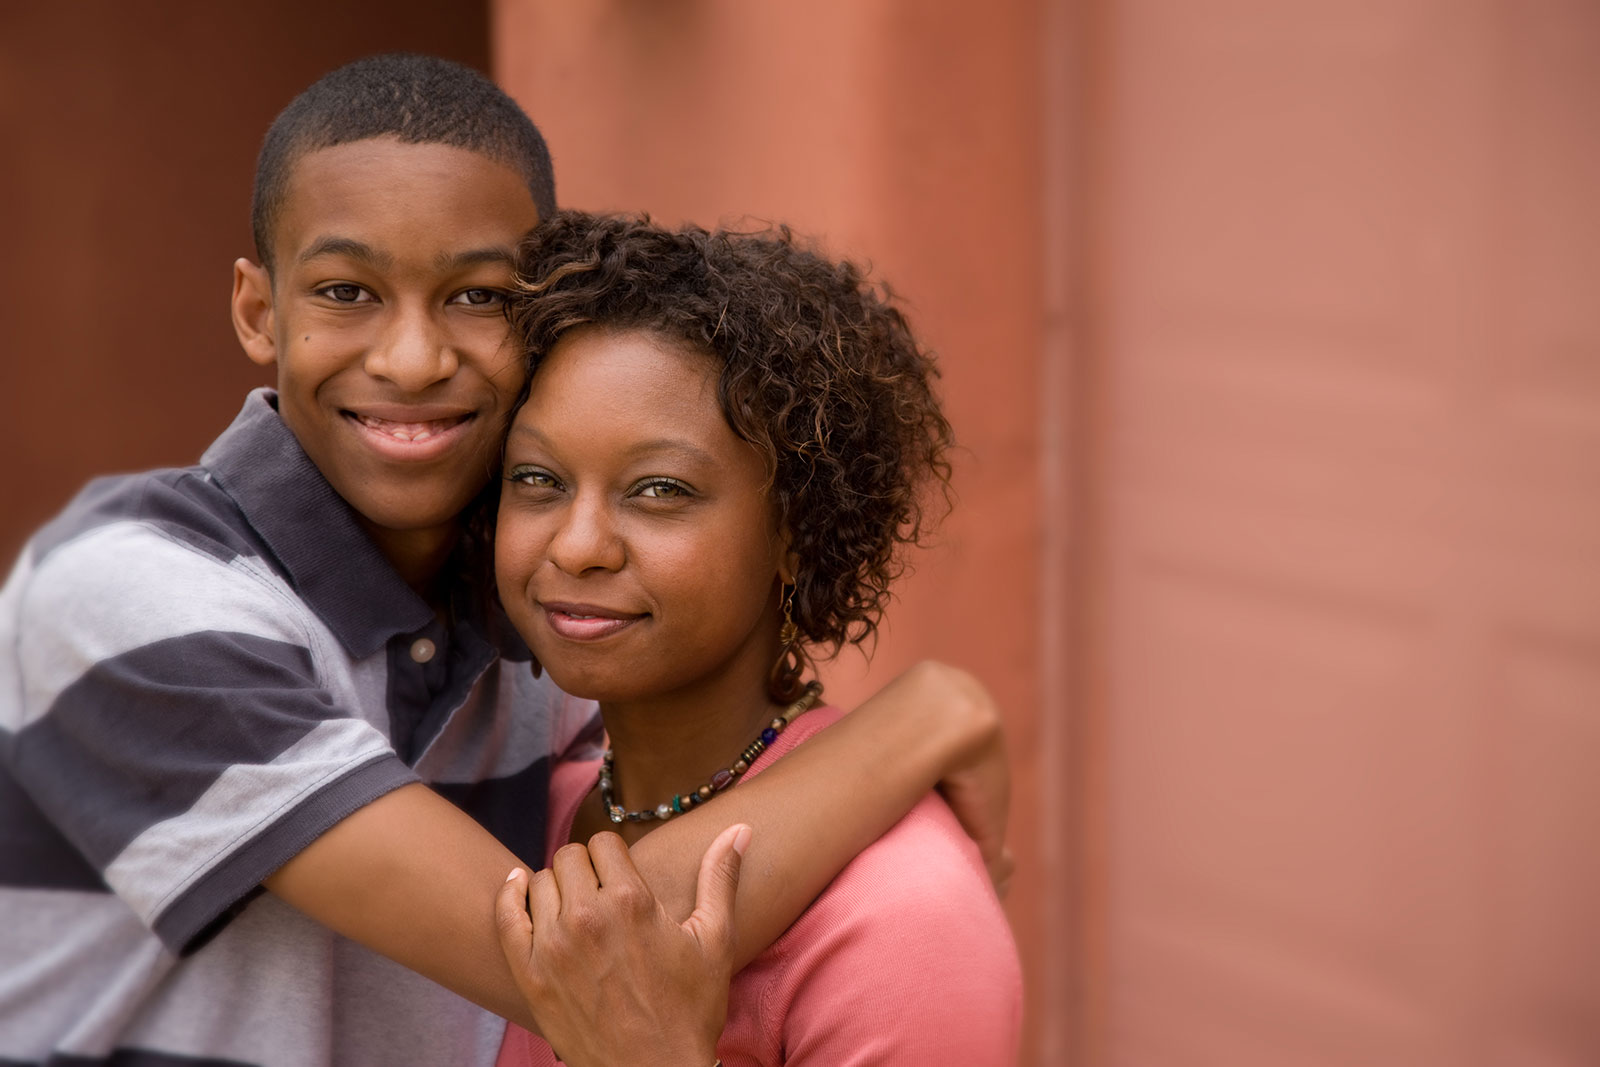 African-American teenager giving his Mom a hug